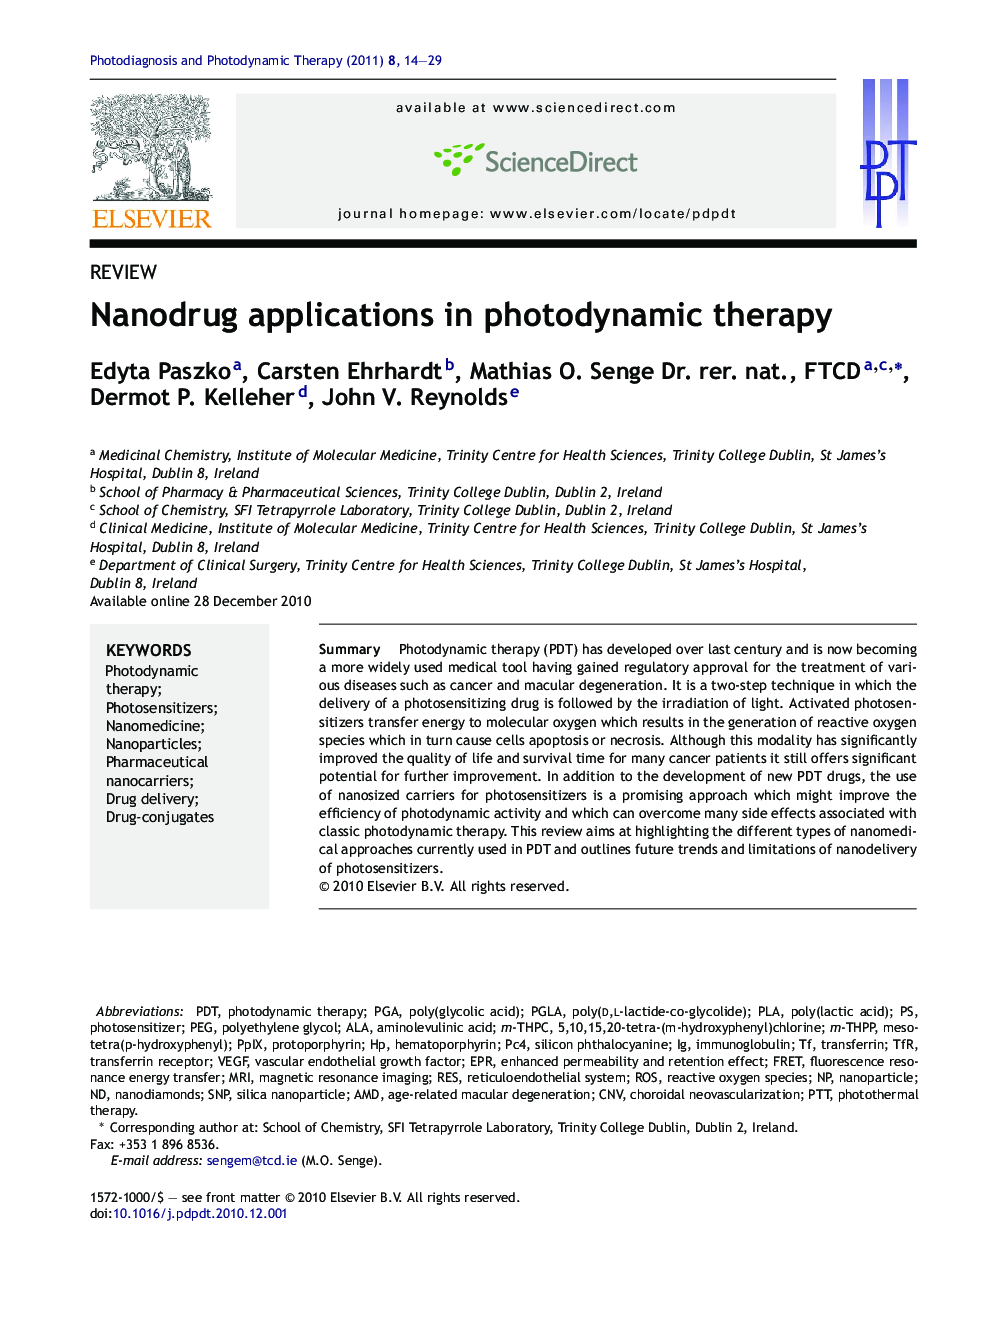 Nanodrug applications in photodynamic therapy